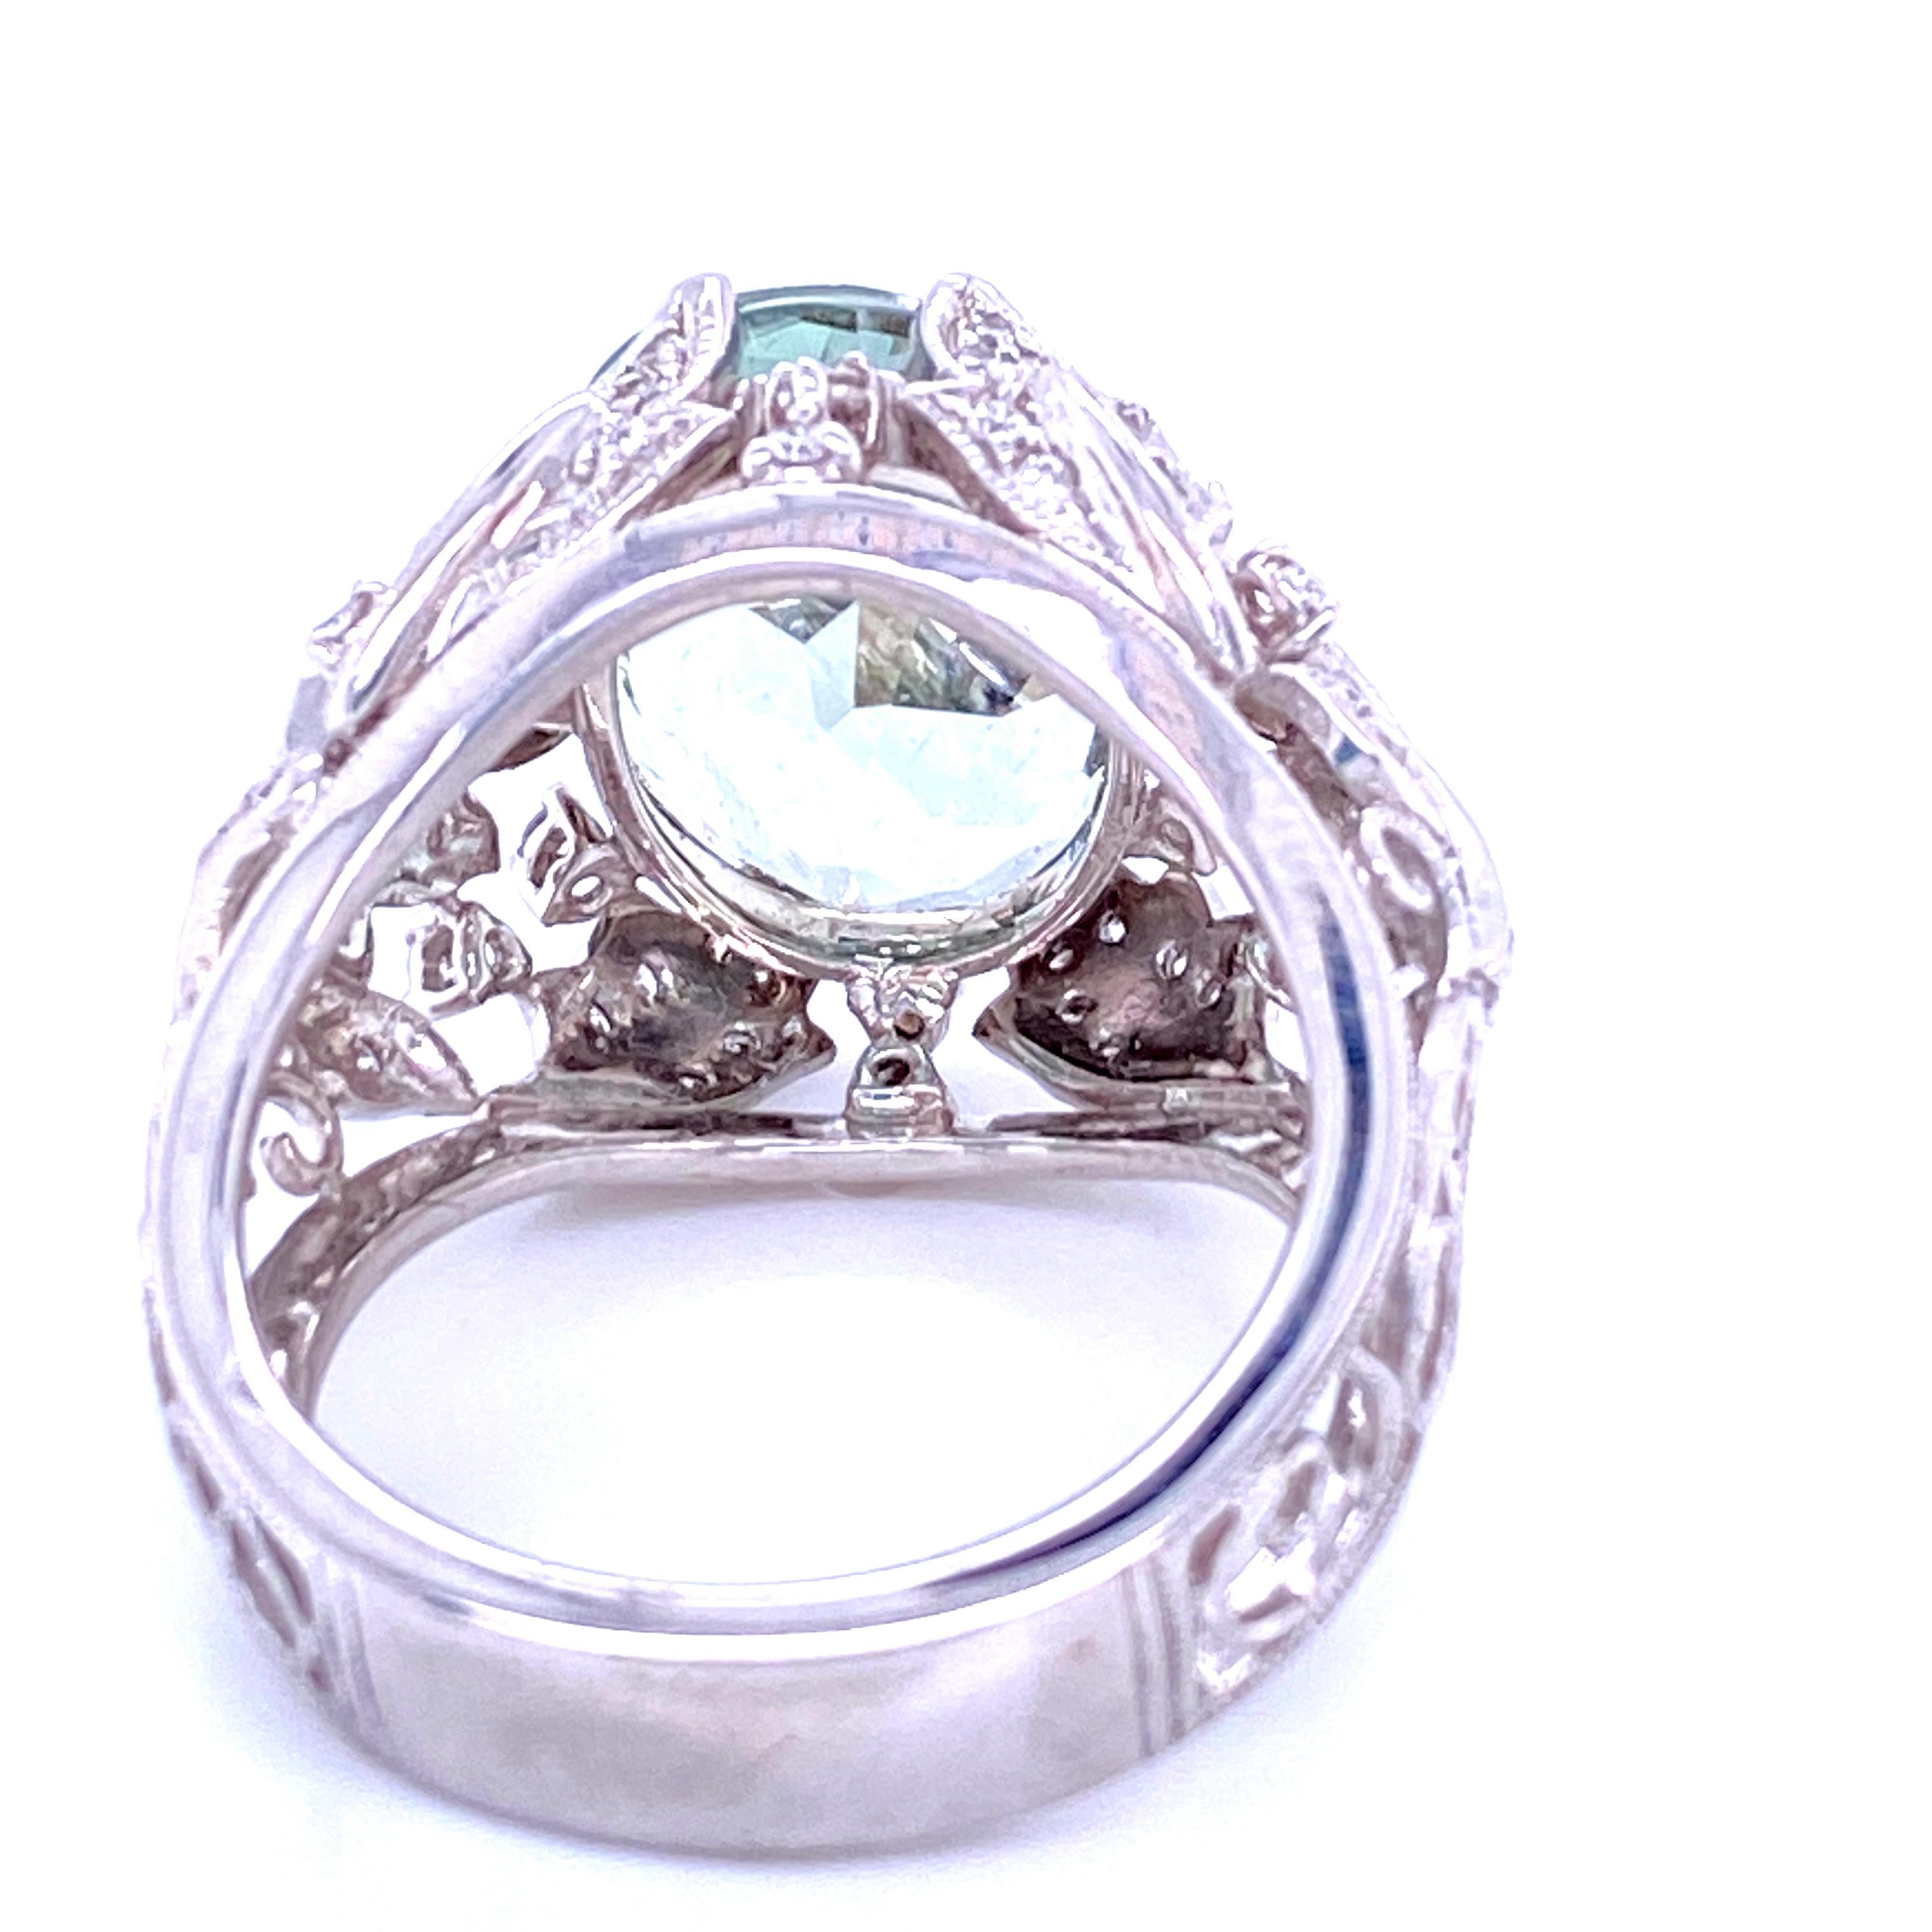 Oval Cut Art Nouveau Inspired Green Quartz and Diamond Ring